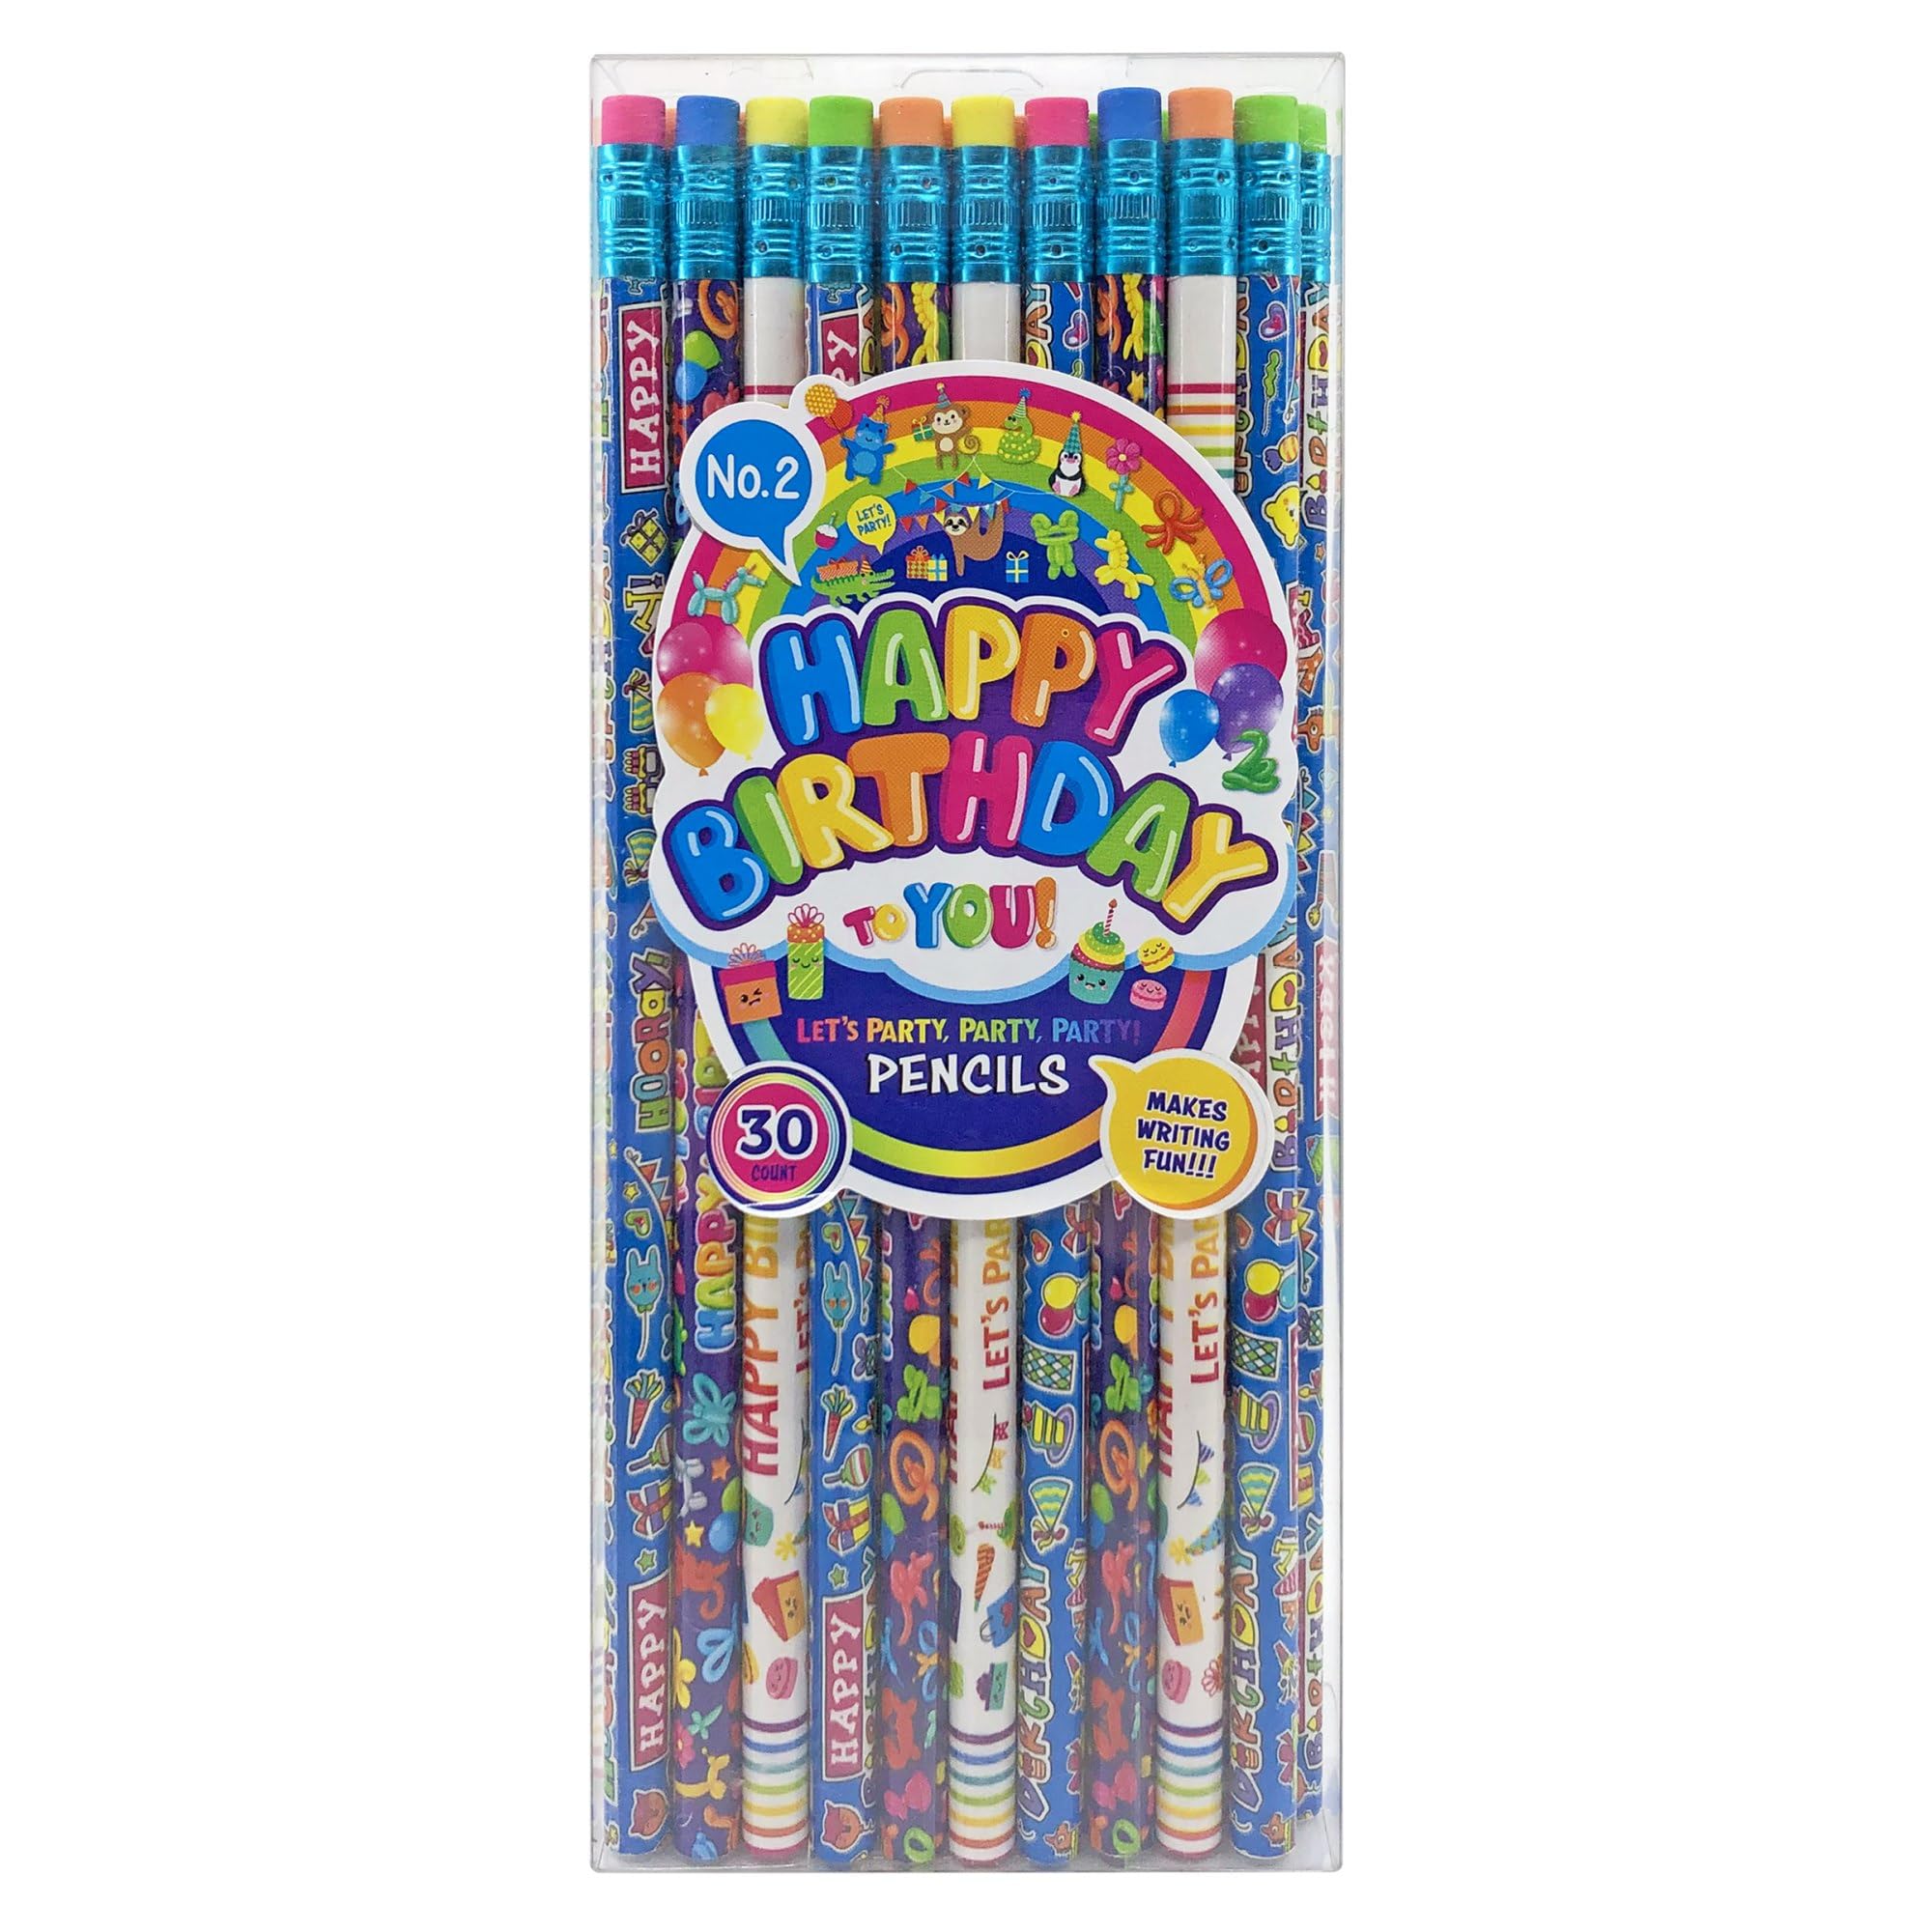 Cra-Z-Art Pencils, Assorted Happy Birthday Designs, Pack Of 30 Pencils